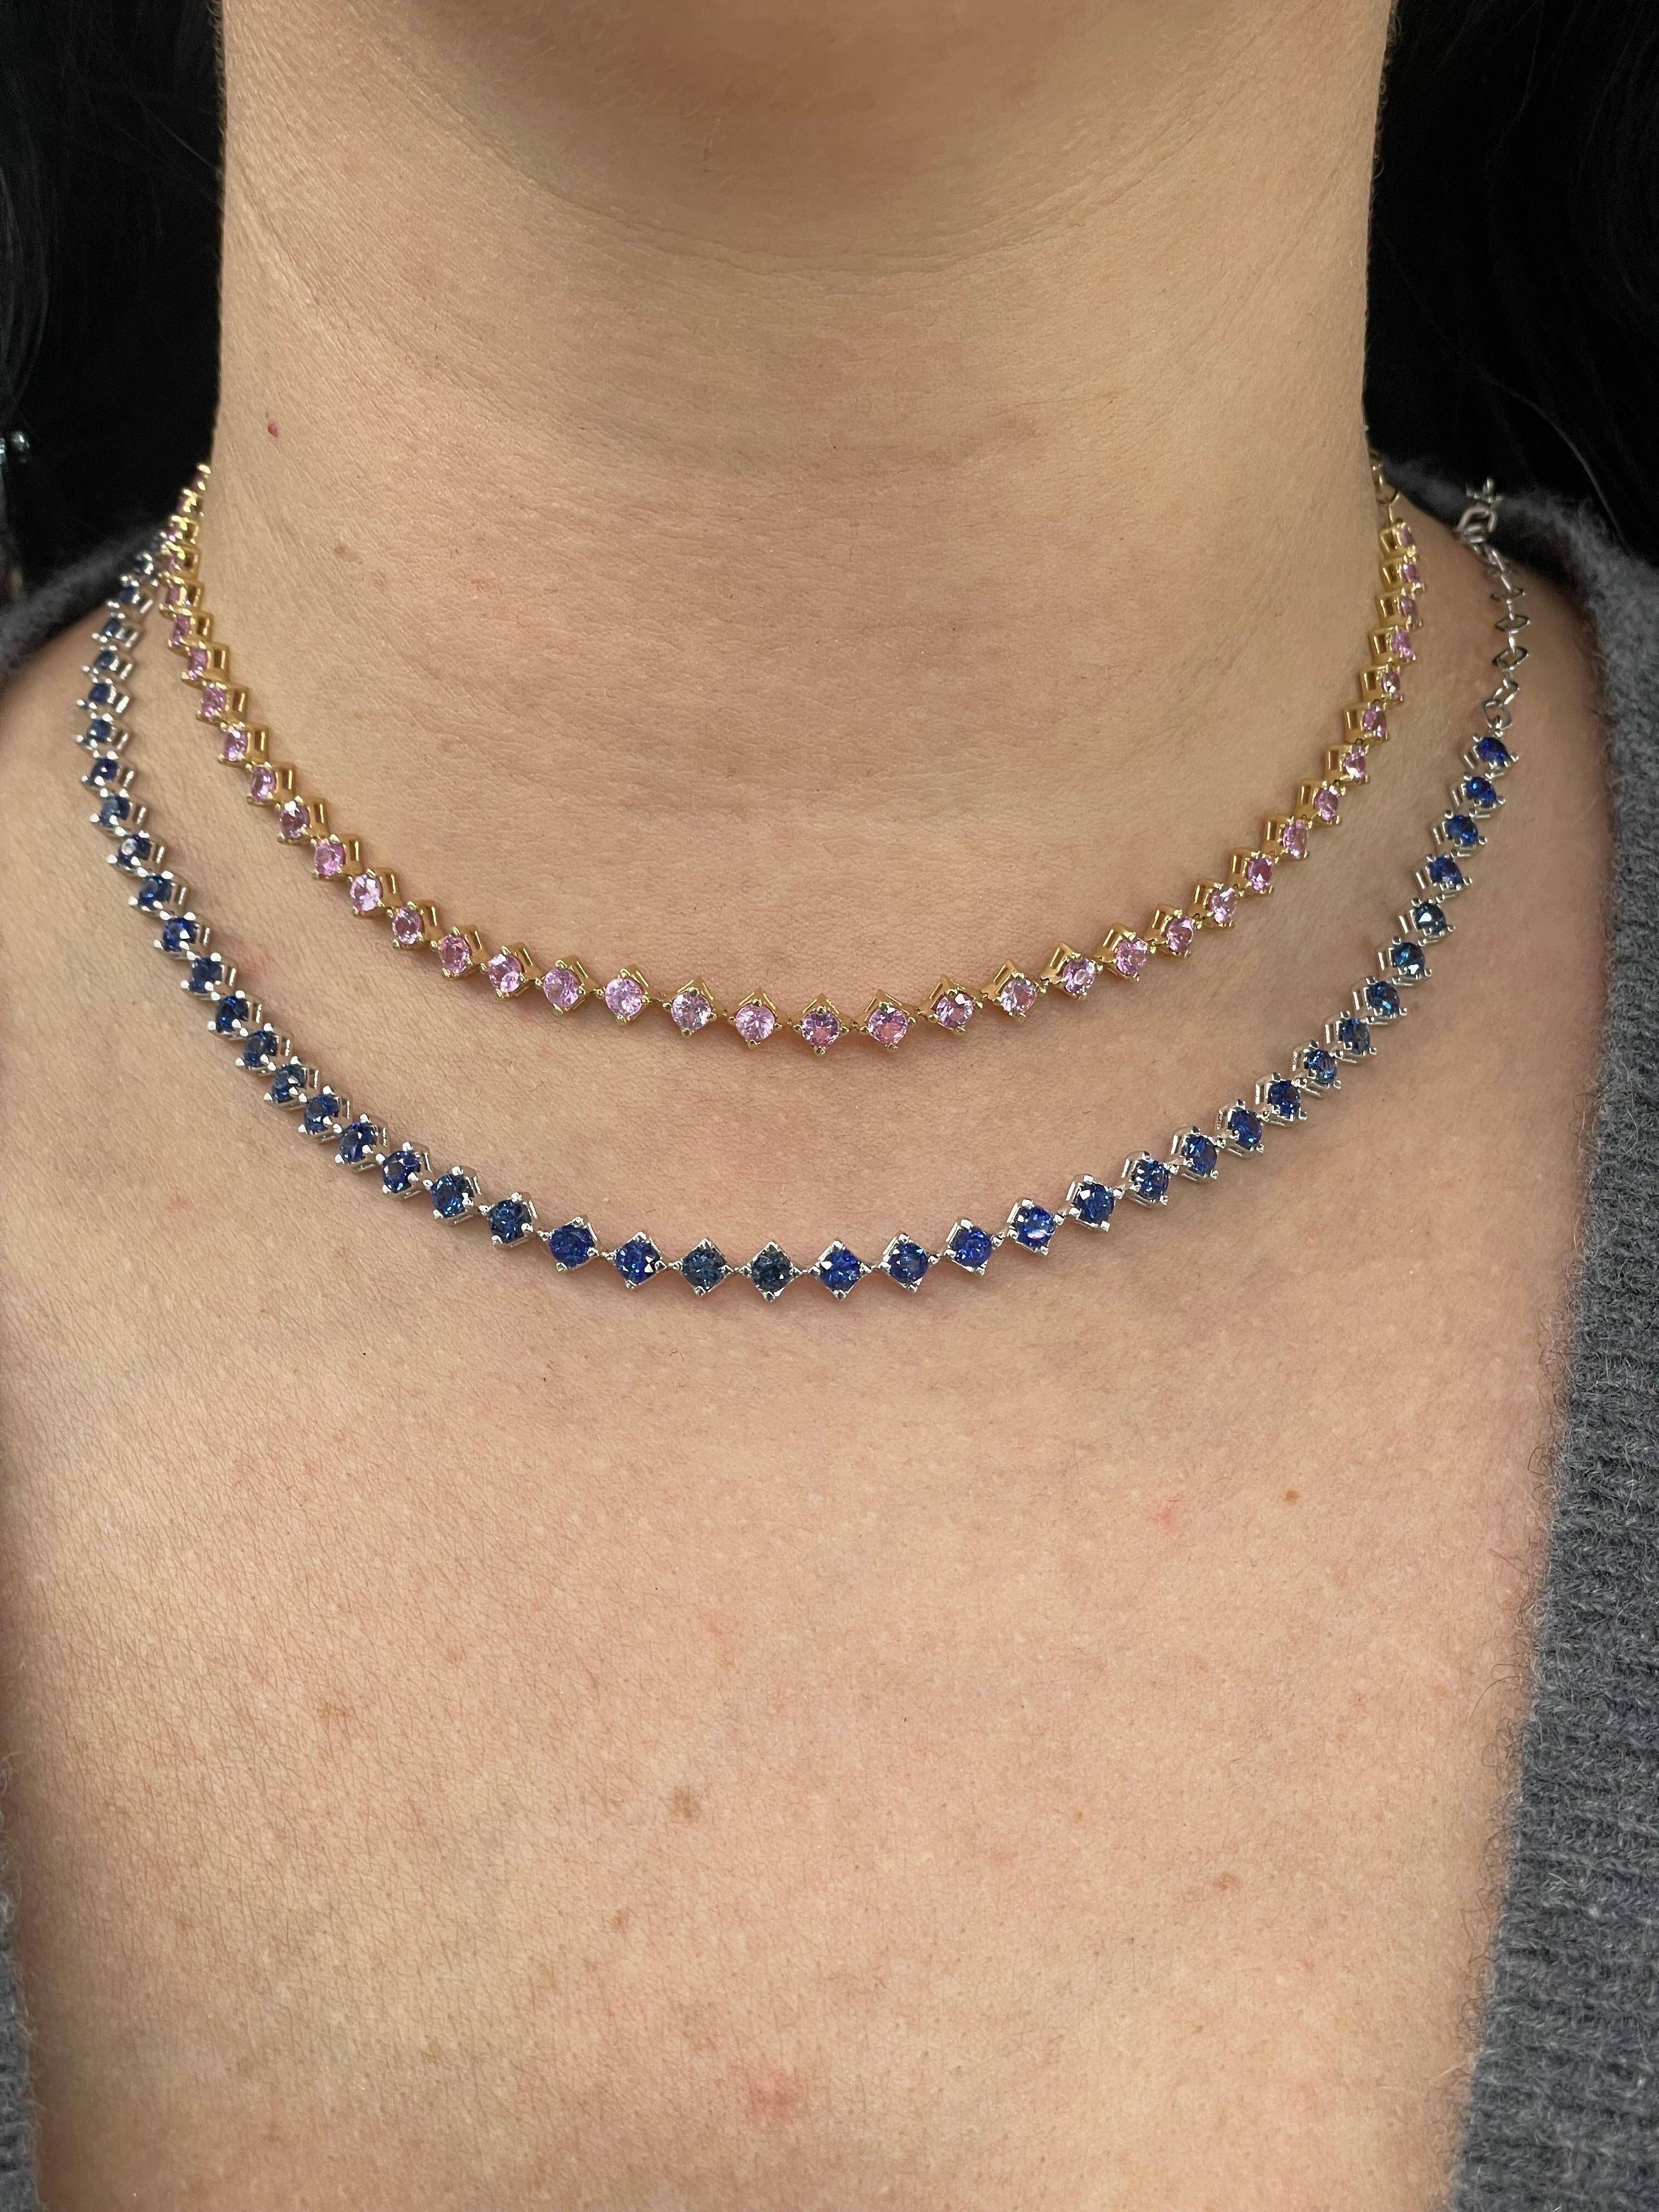 Blue Sapphire Choker Necklace & Bracelet 14 Karat White Gold 6.06 Carats 5